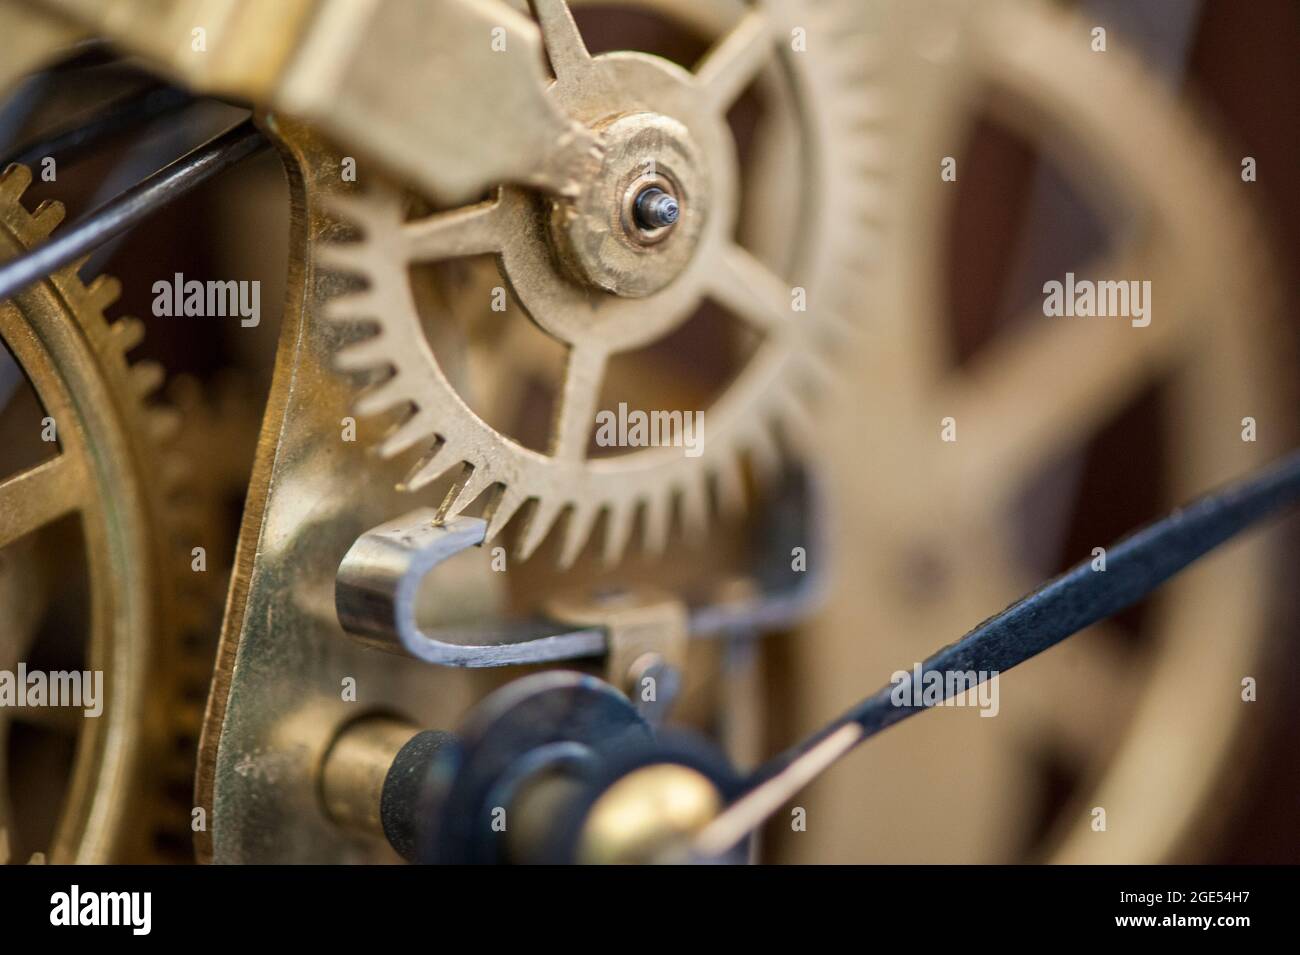 The internal movements of an analog clock. Stock Photo